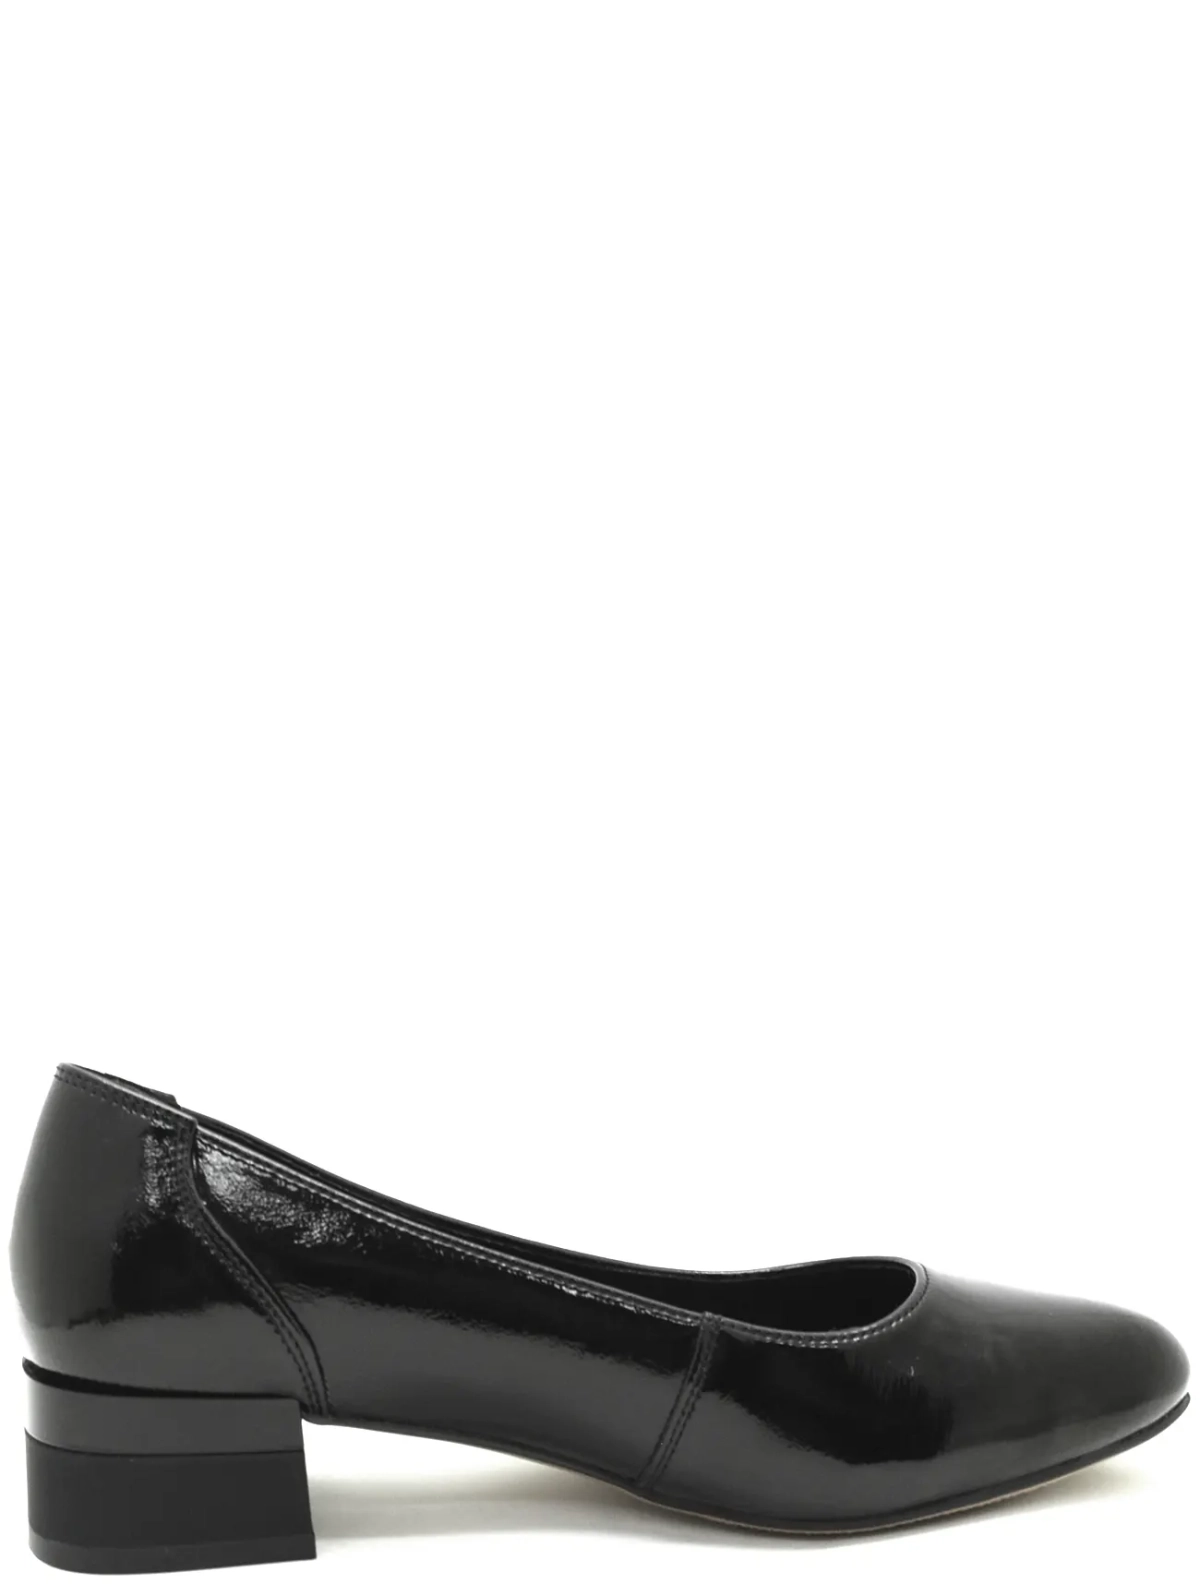 Baden EH274-021 женские туфли